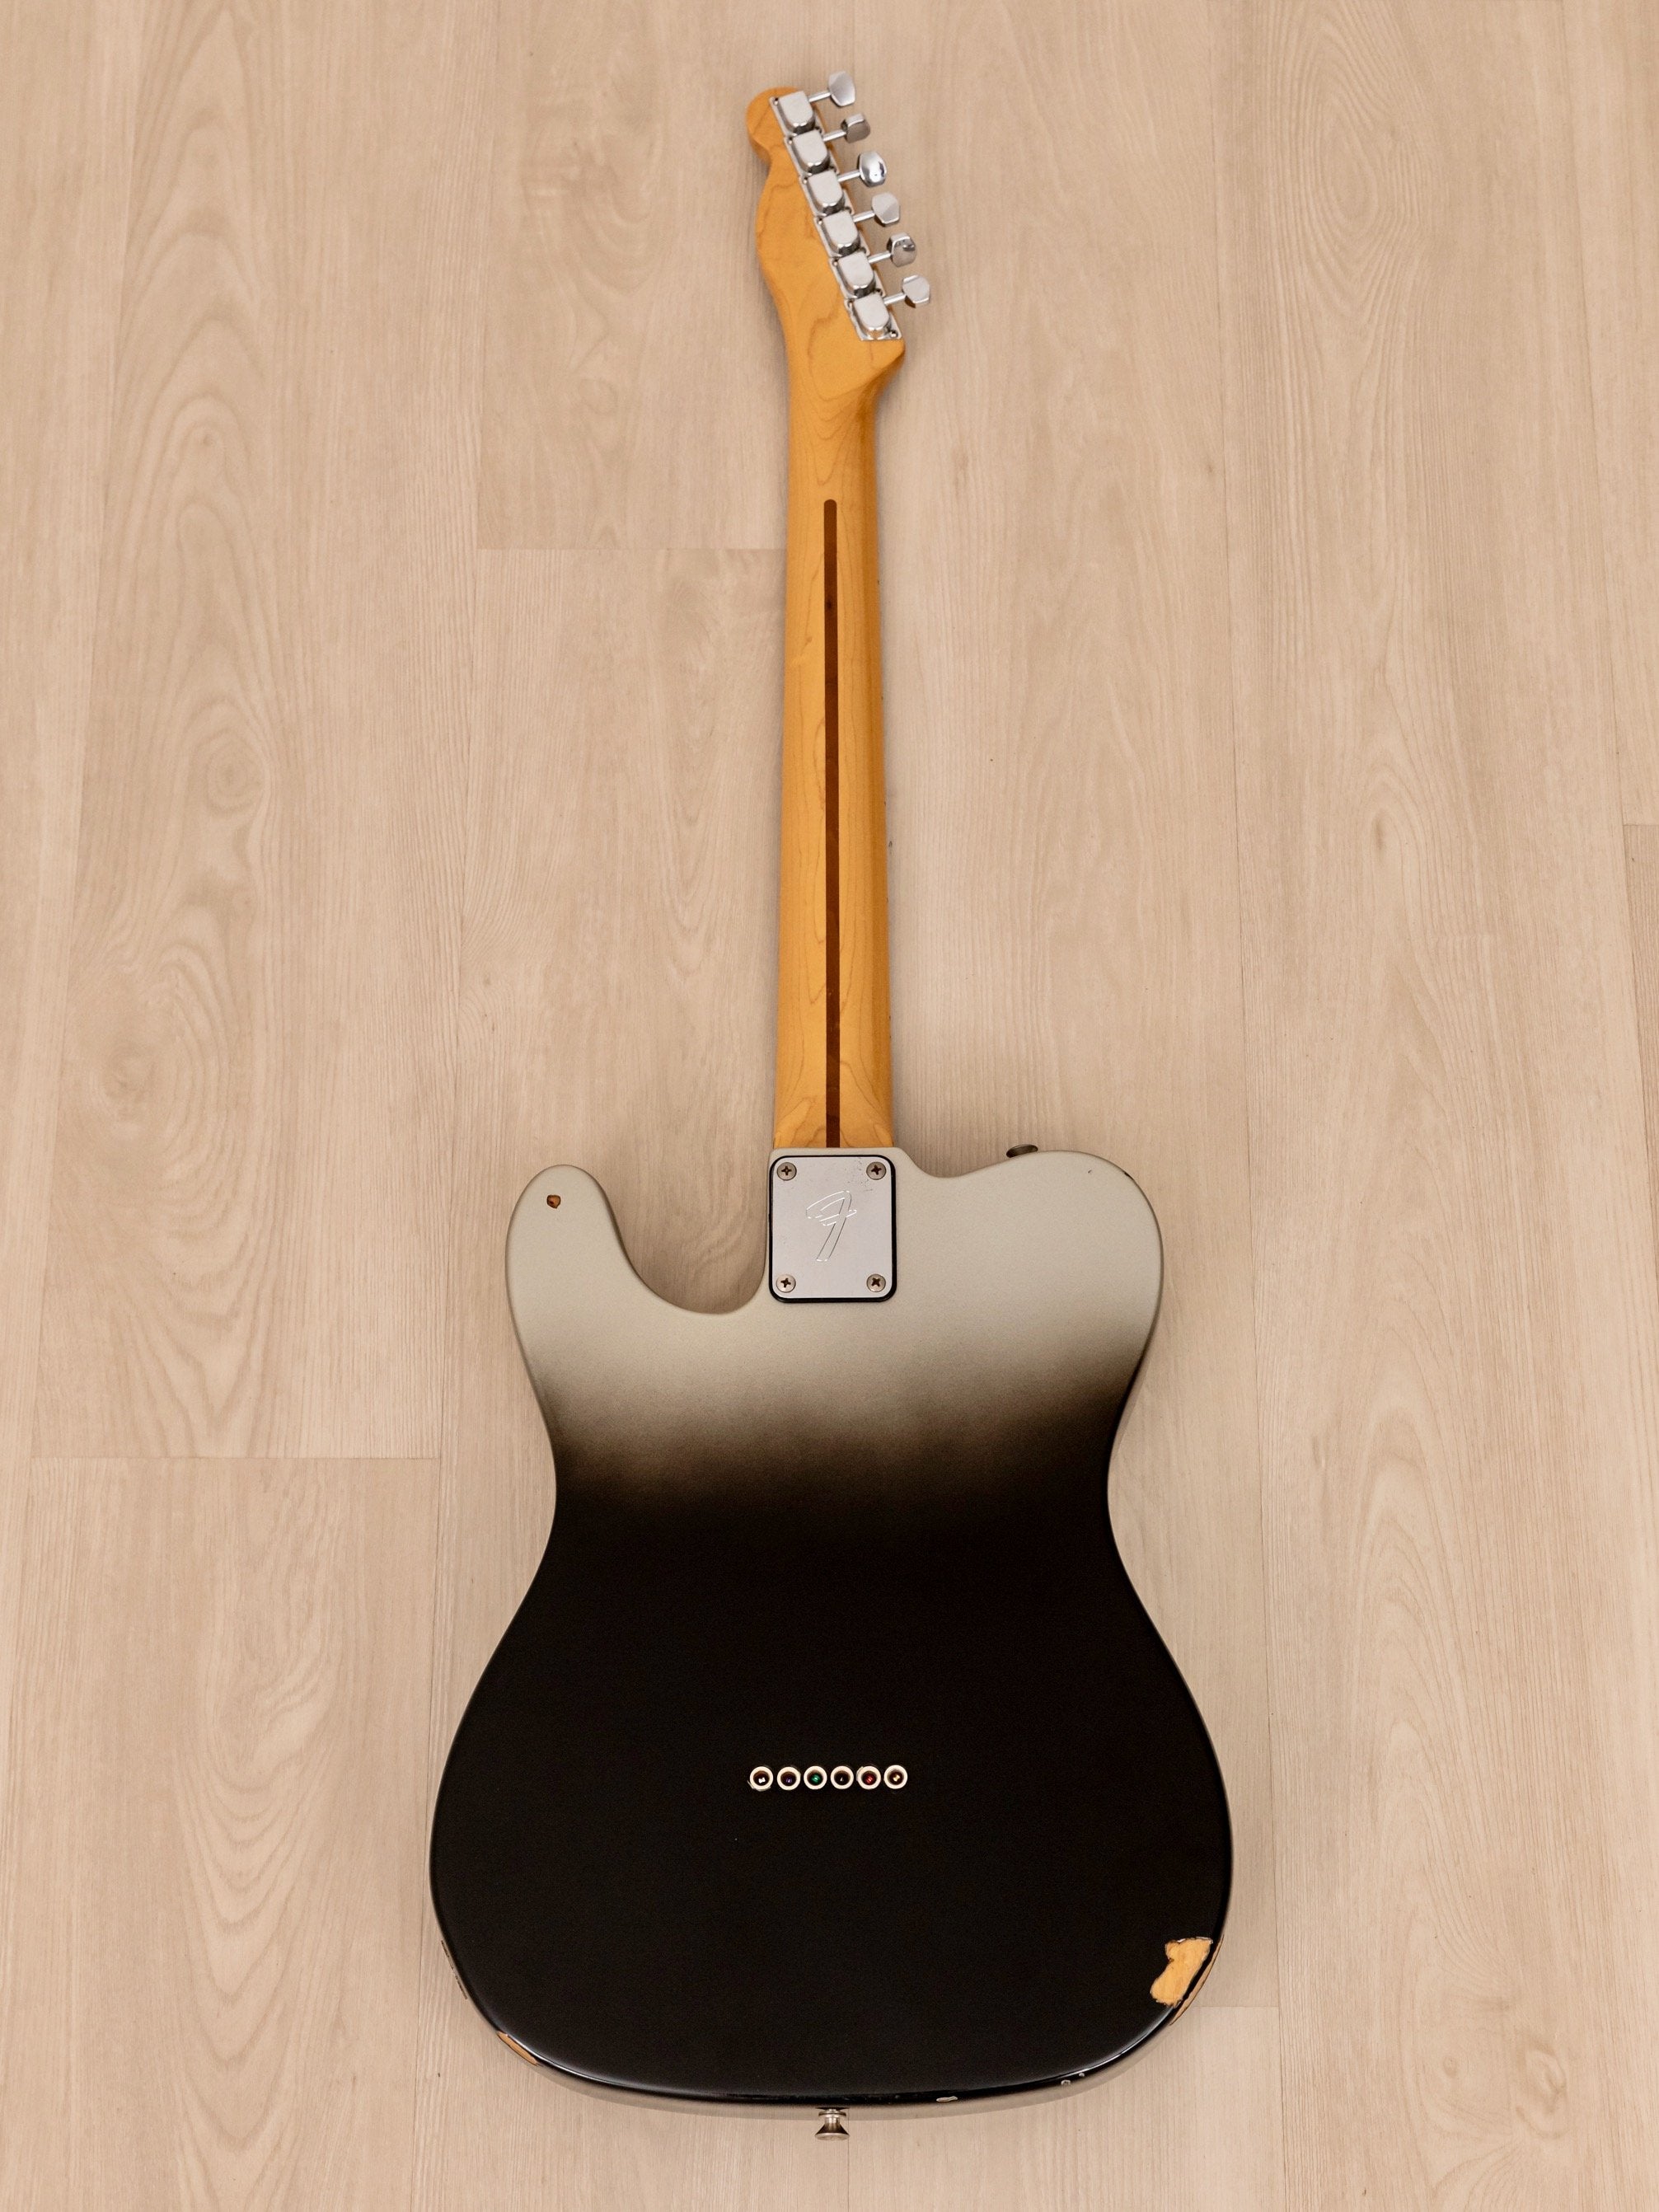 1982 Fender Telecaster Vintage Electric Guitar Black Stratoburst Finish w/ Case